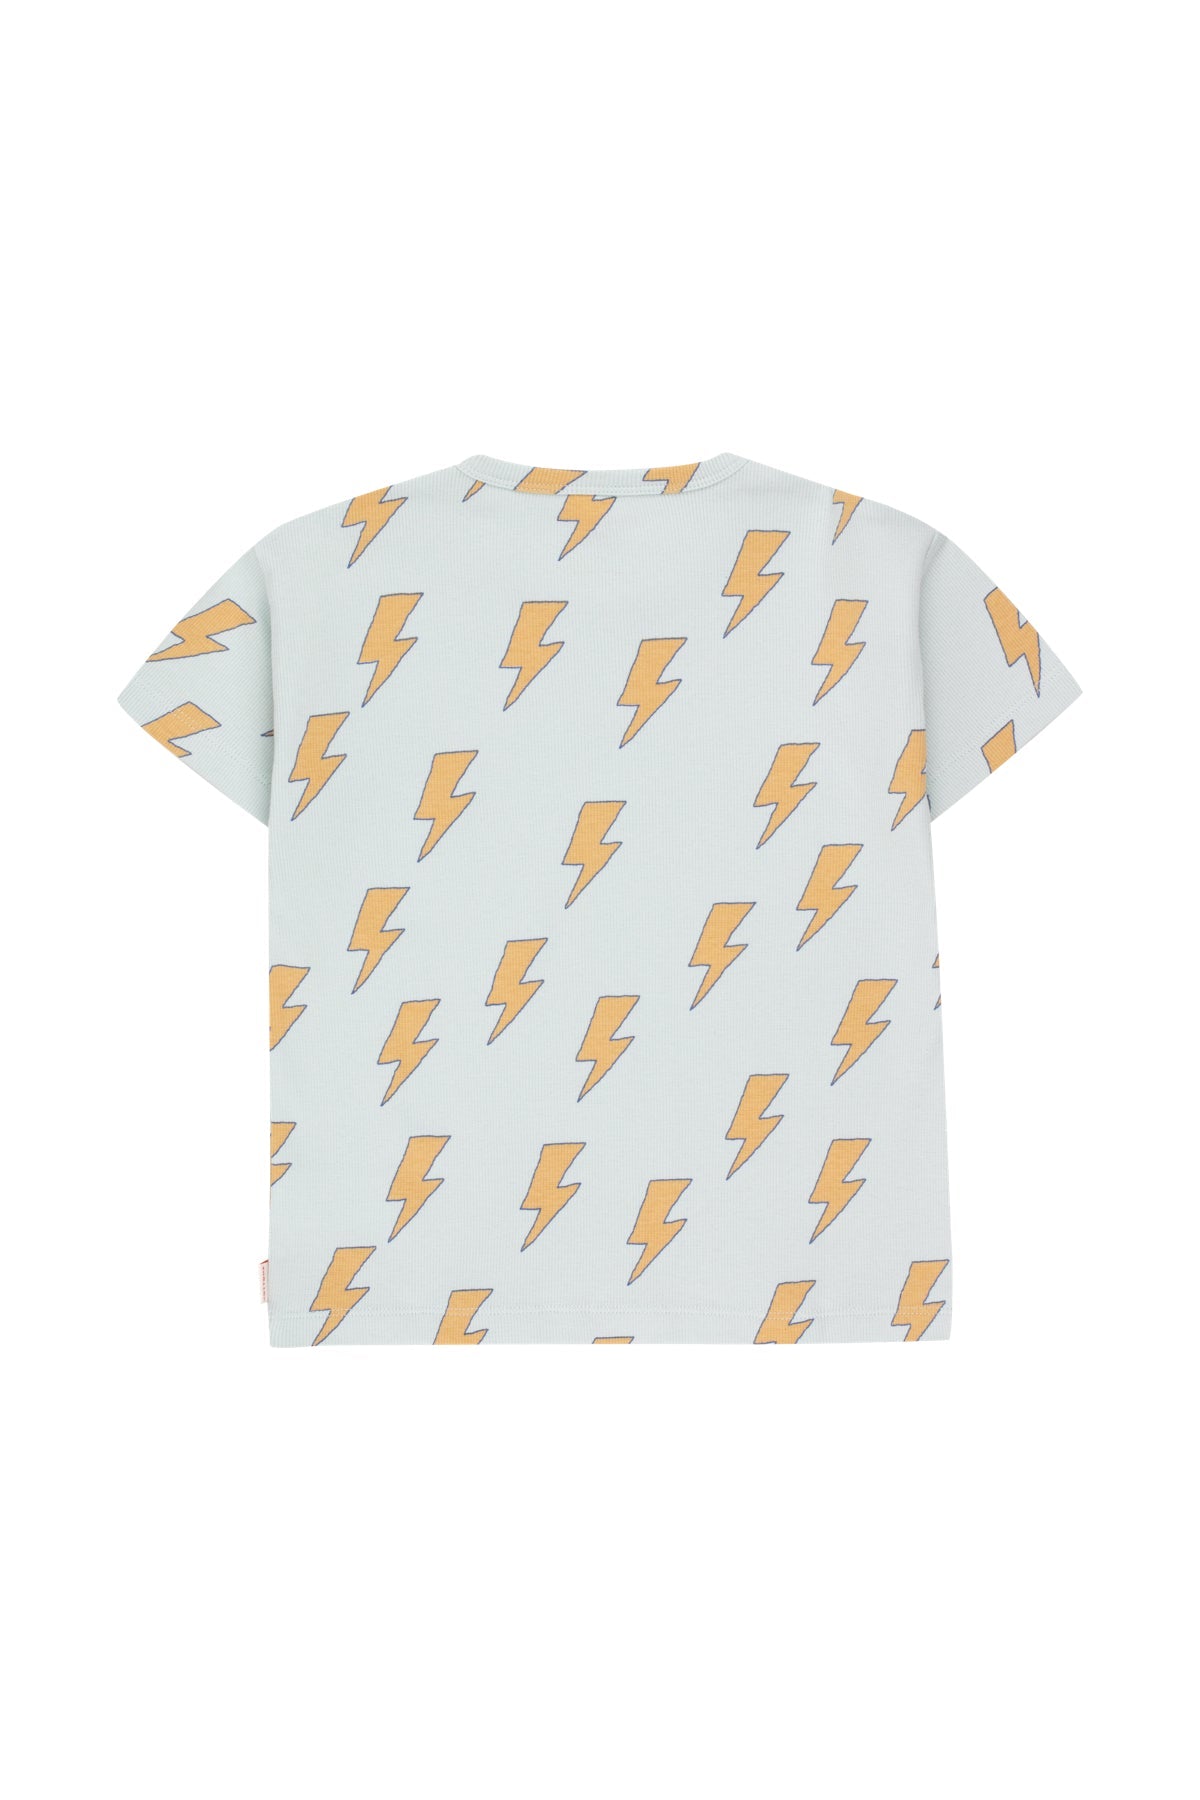 Lightning T-Shirt - Tiny Cottons